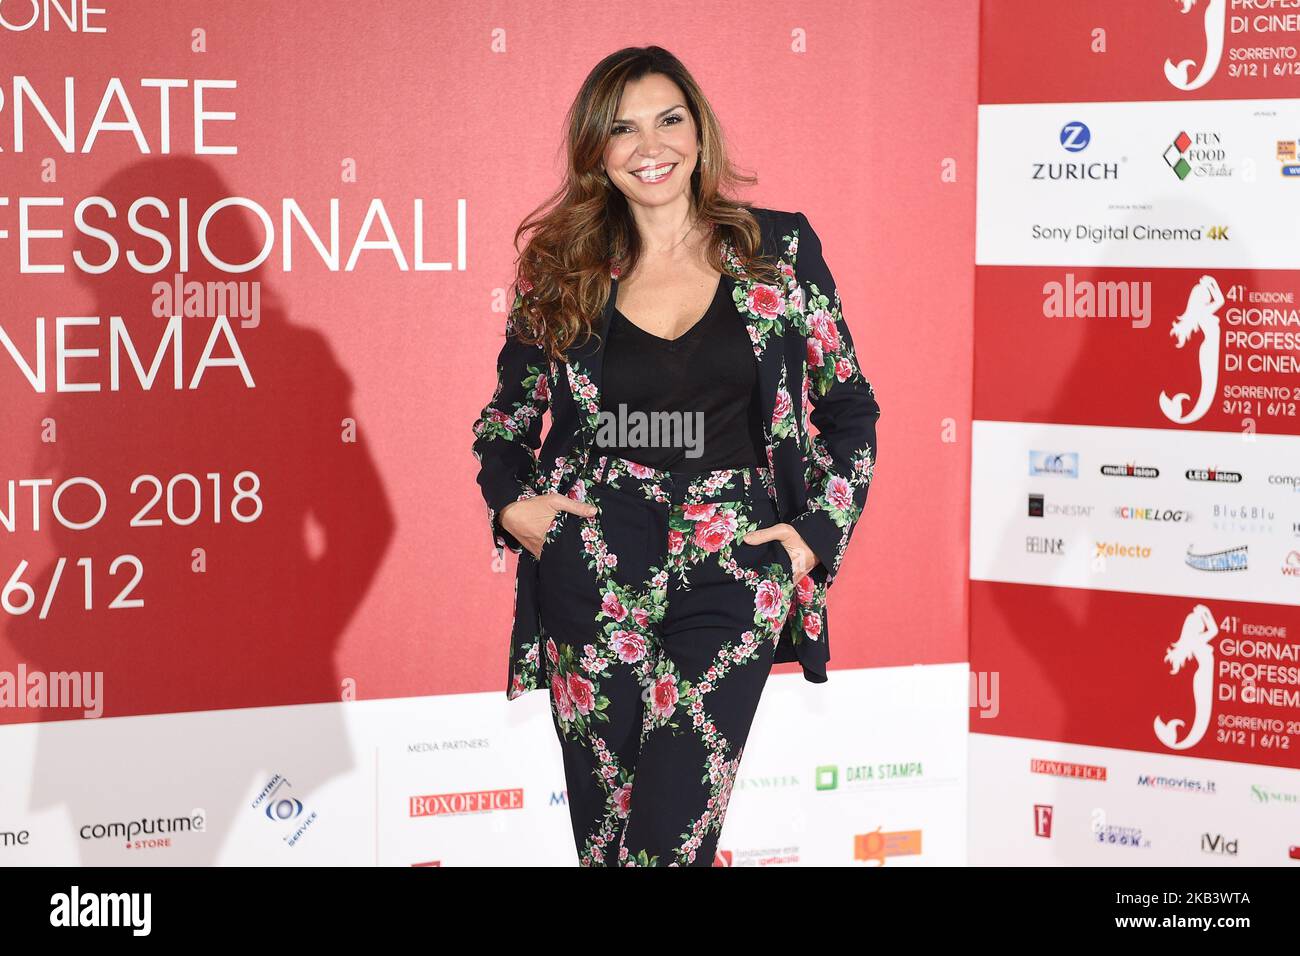 Maria Pia Calzone attends a photocall during the 41th Giornate Professionali del Cinema Sorrento Italy on 5 December 2018. (Photo Franco Romano/NurPhoto) Stock Photo